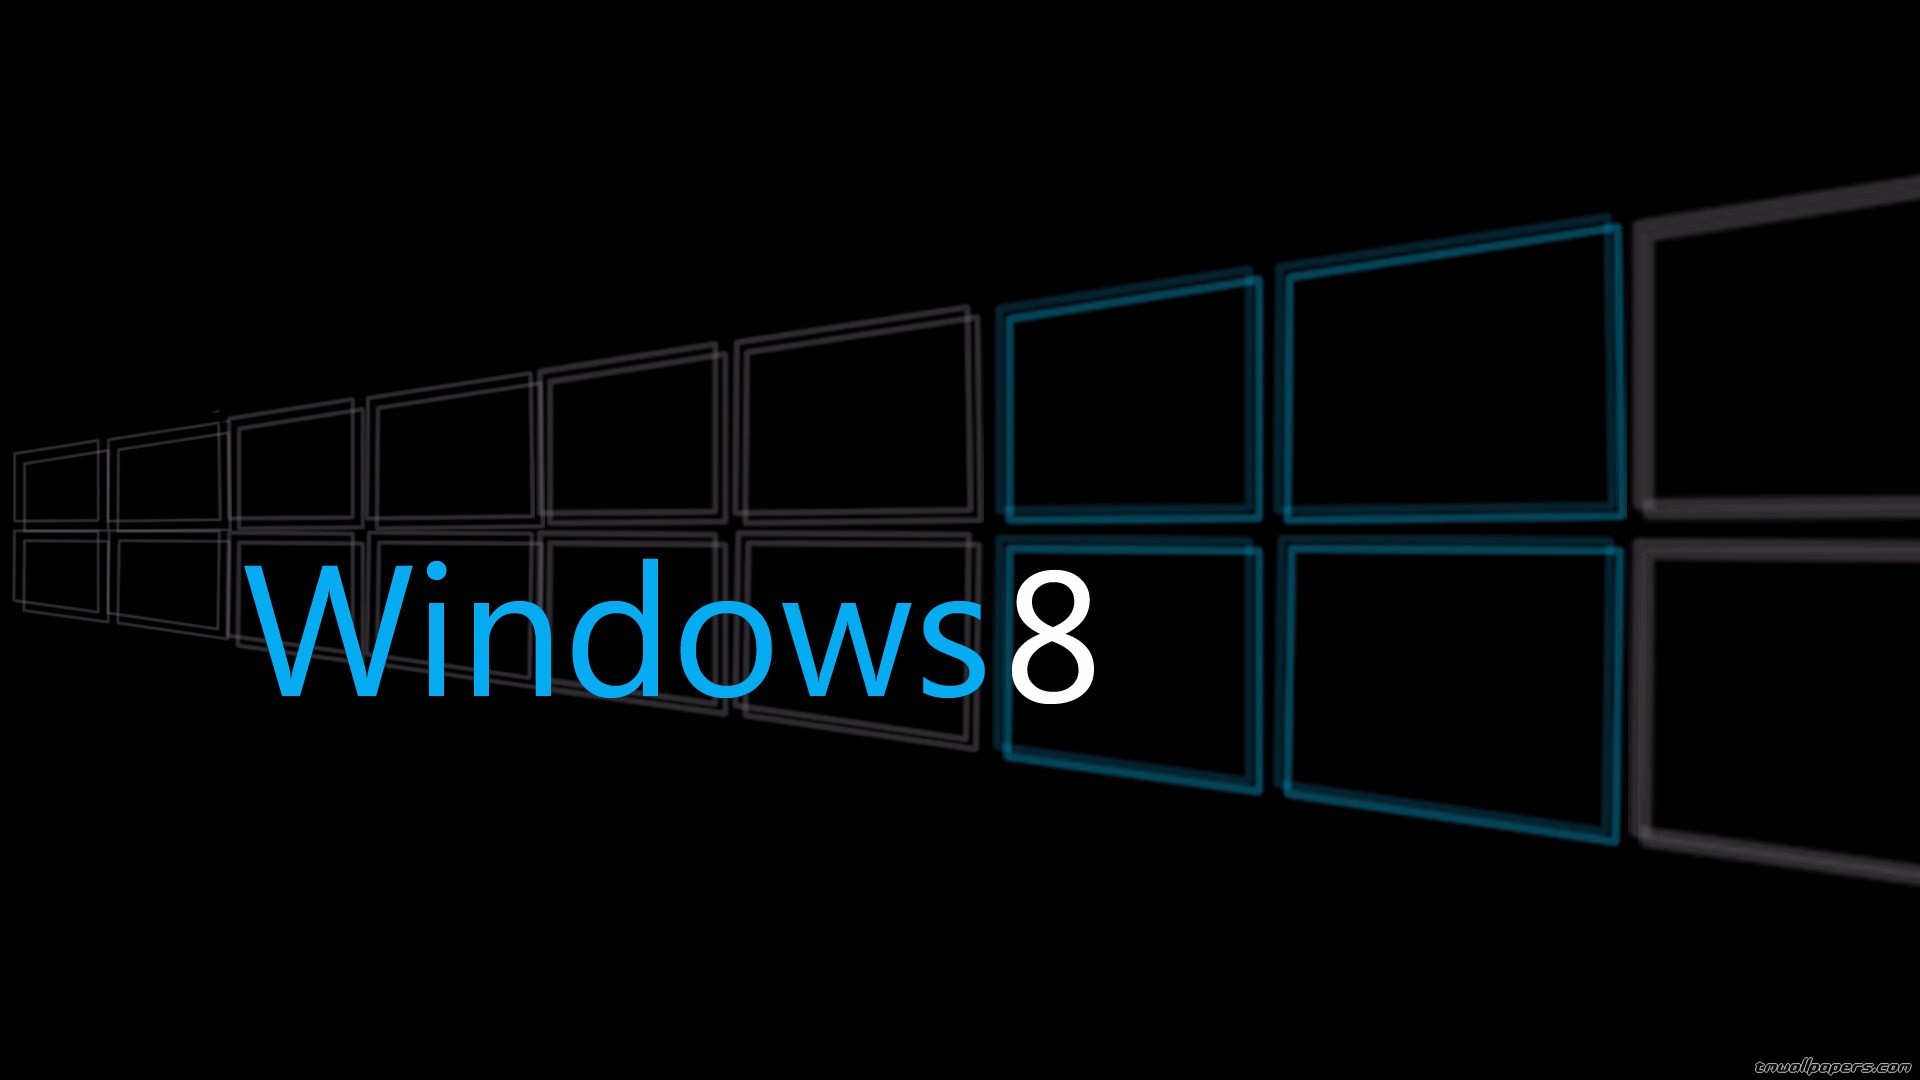 Load 8 1. Обои Windows 8. Заставка Windows 8. Windows 8.1 рабочий стол. Картинки виндовс 8.